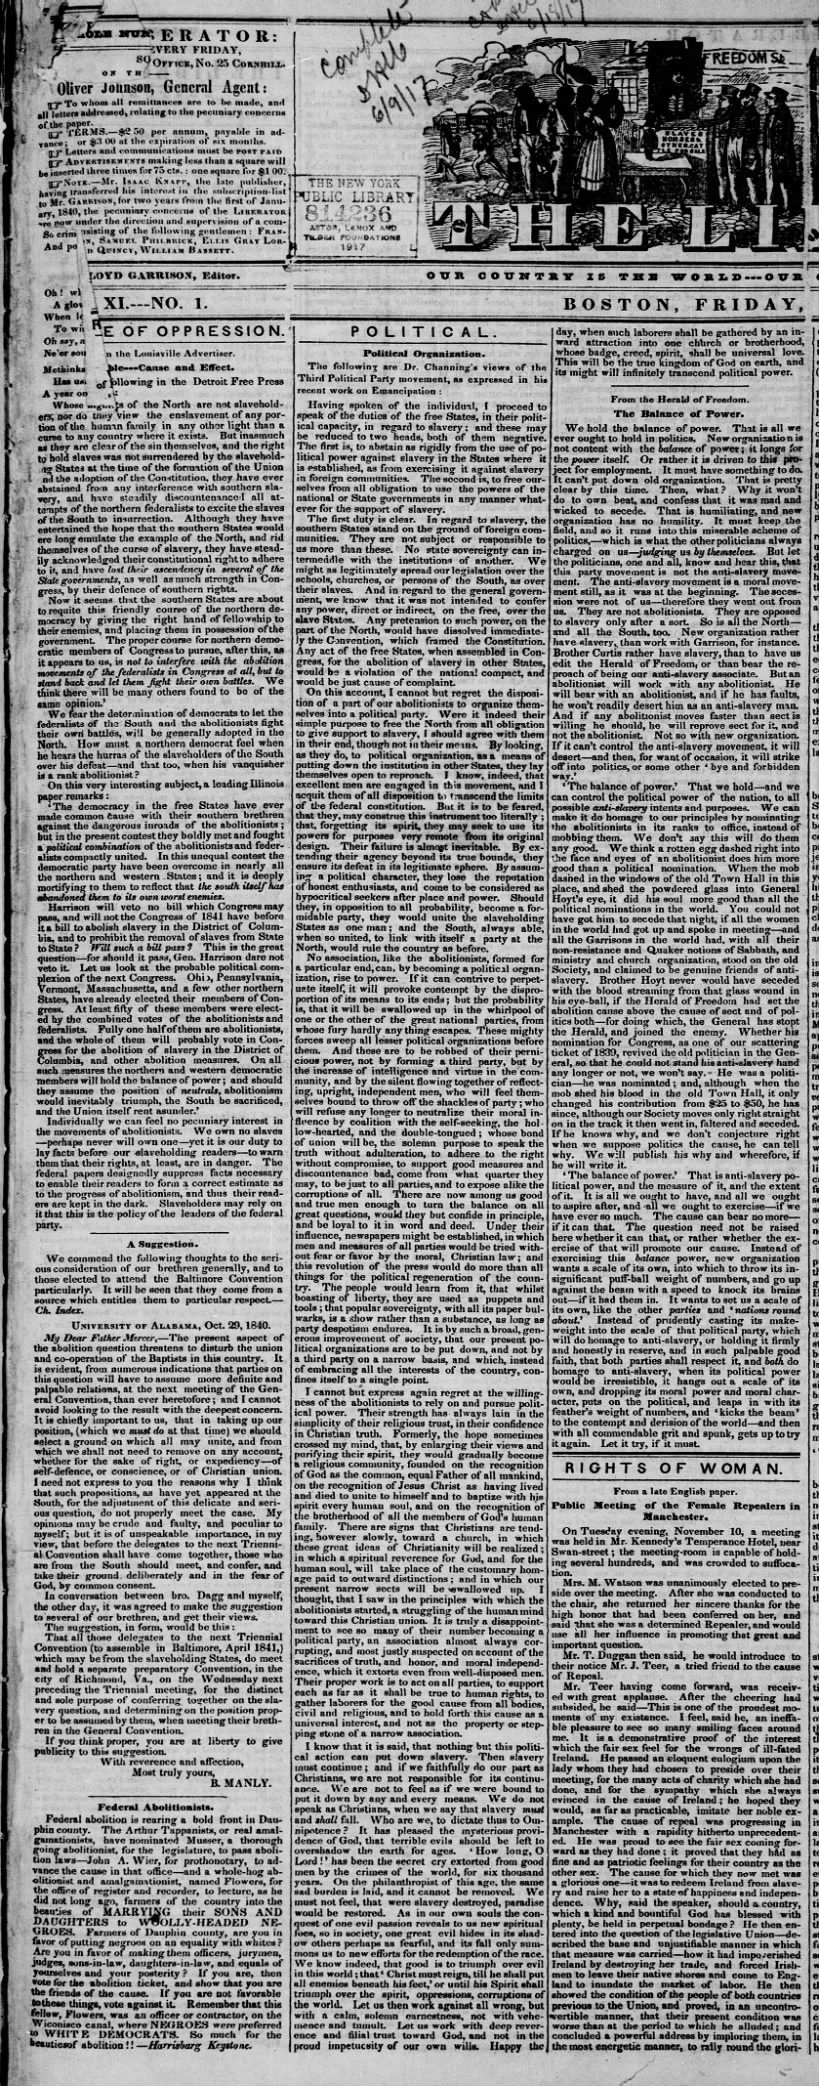 THE LIBERATOR, 01 JAN 1841 FRI, PAGE 1, SECTION 1